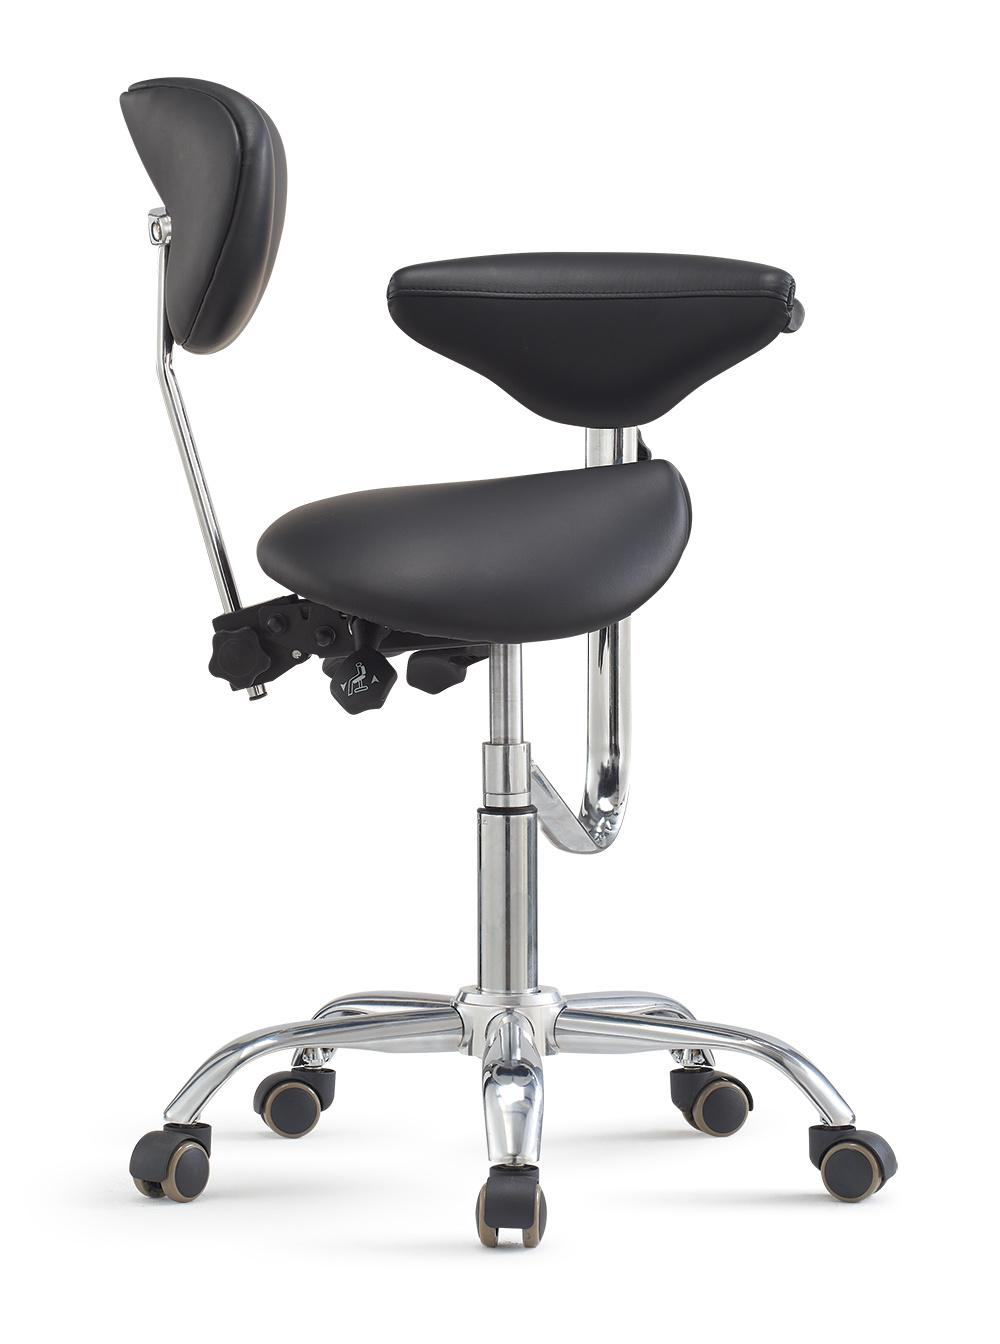 Split Seat Saddle Stool Medical Deatl Assistant Chair with Swivel Armrest